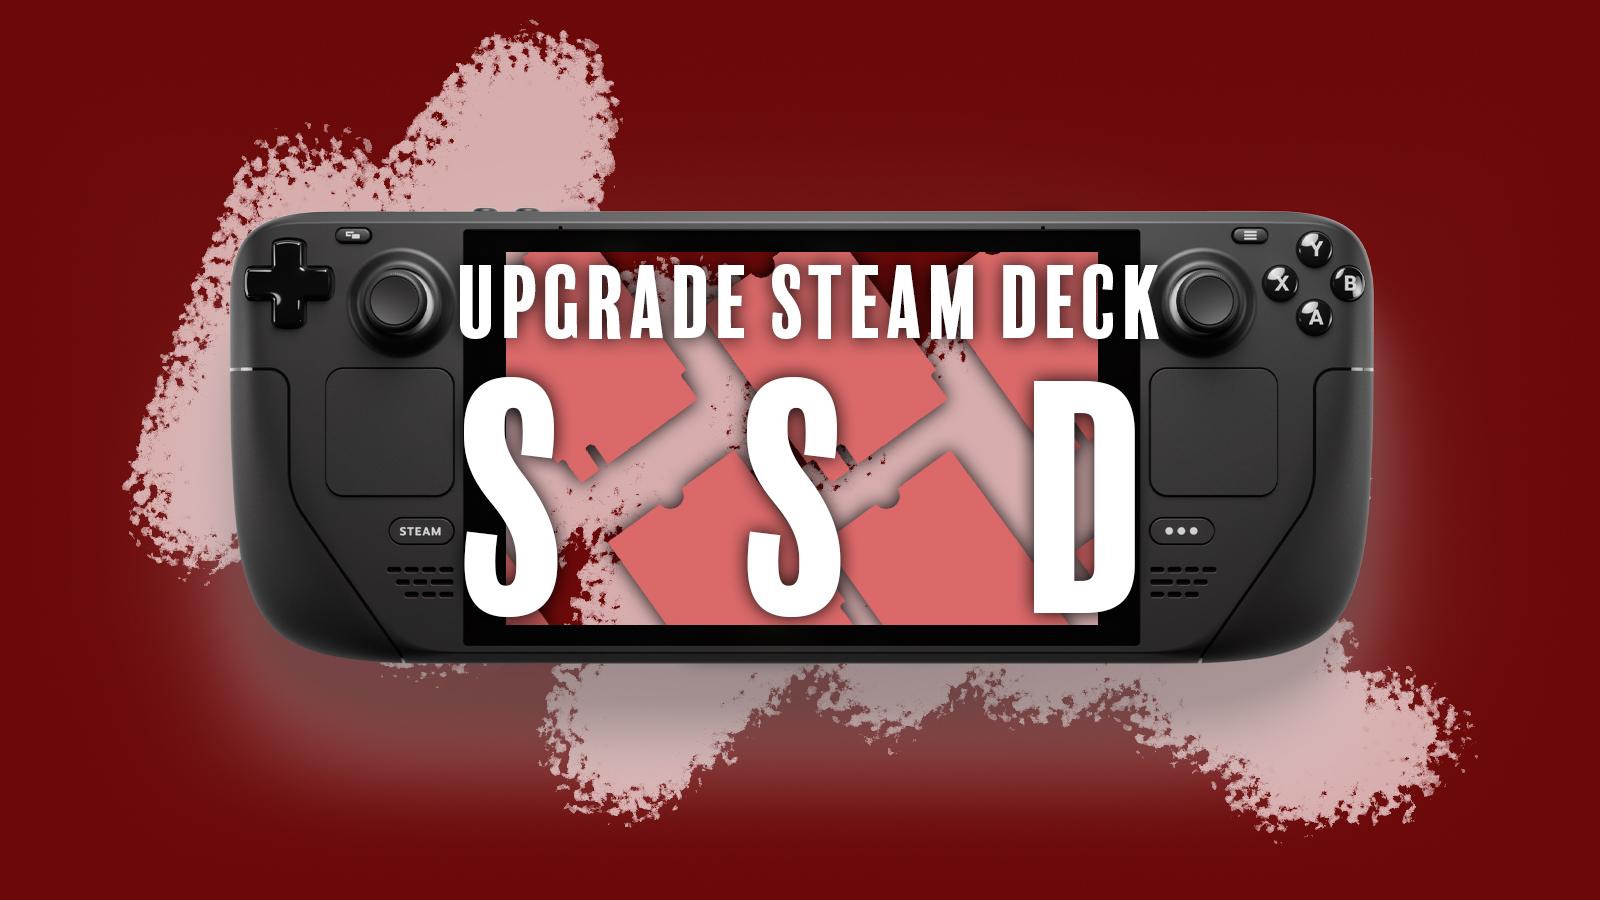 Steam Deck Review in Progress